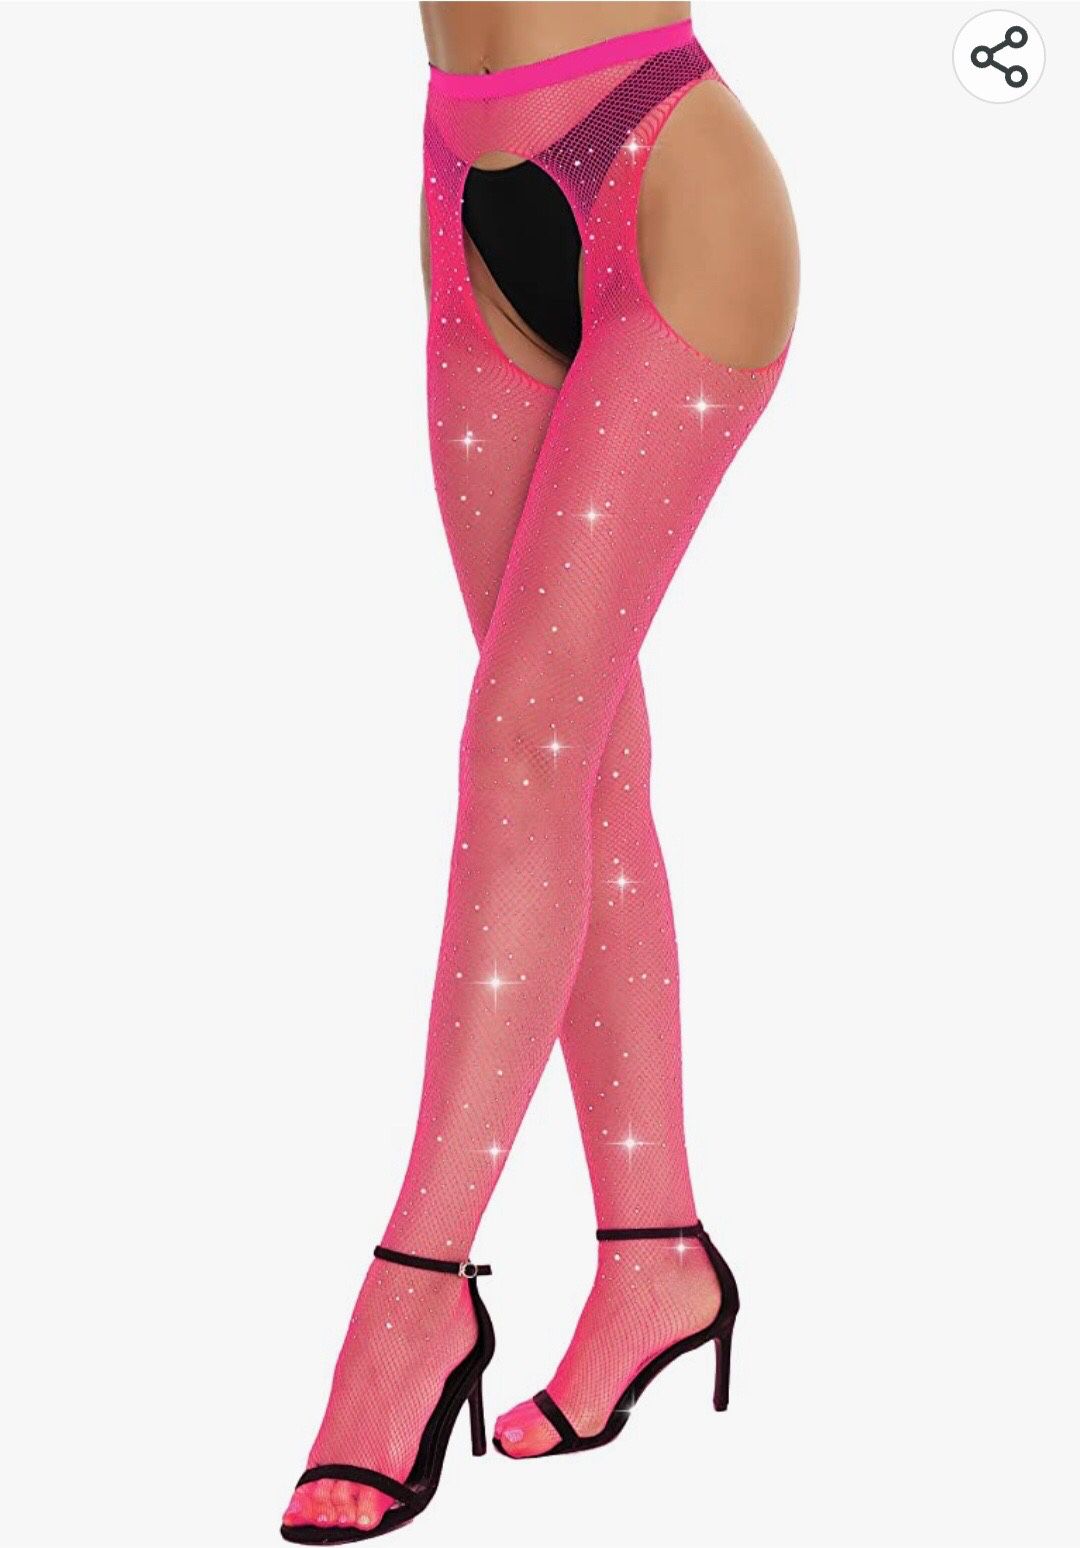 New Hot Pink Fishnet Sparkly Leggings 